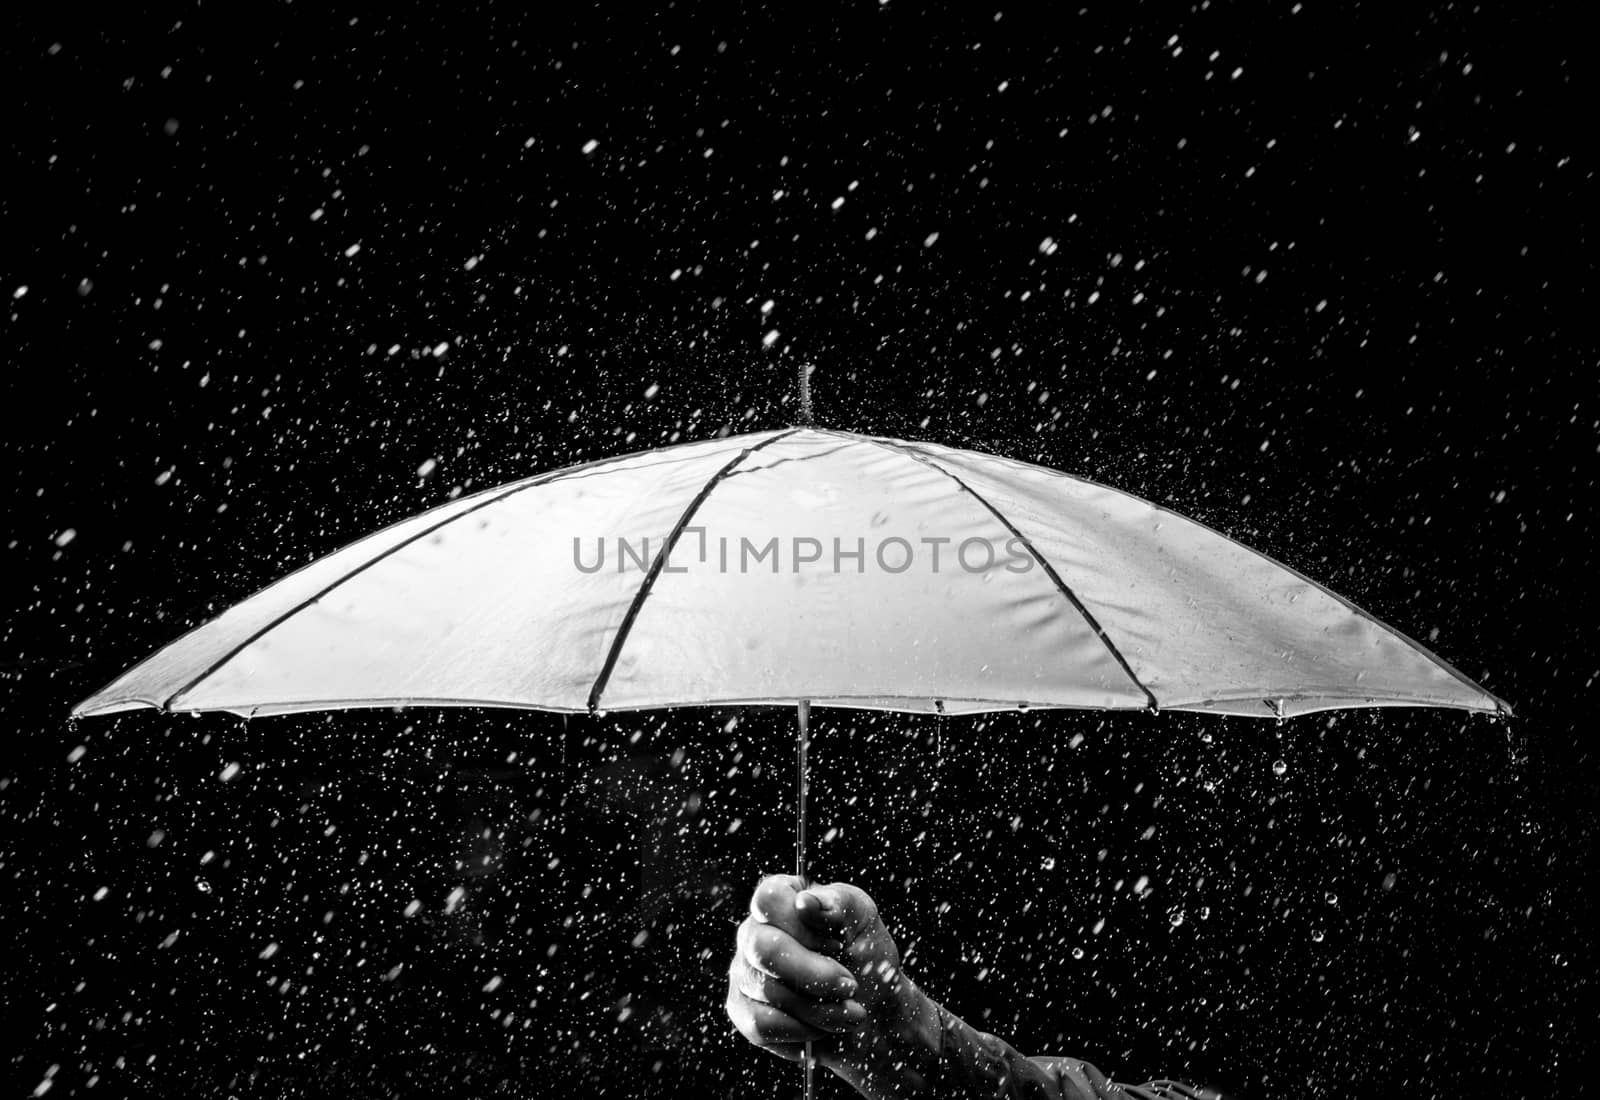 Umbrella under raindrops in black and white by Garsya